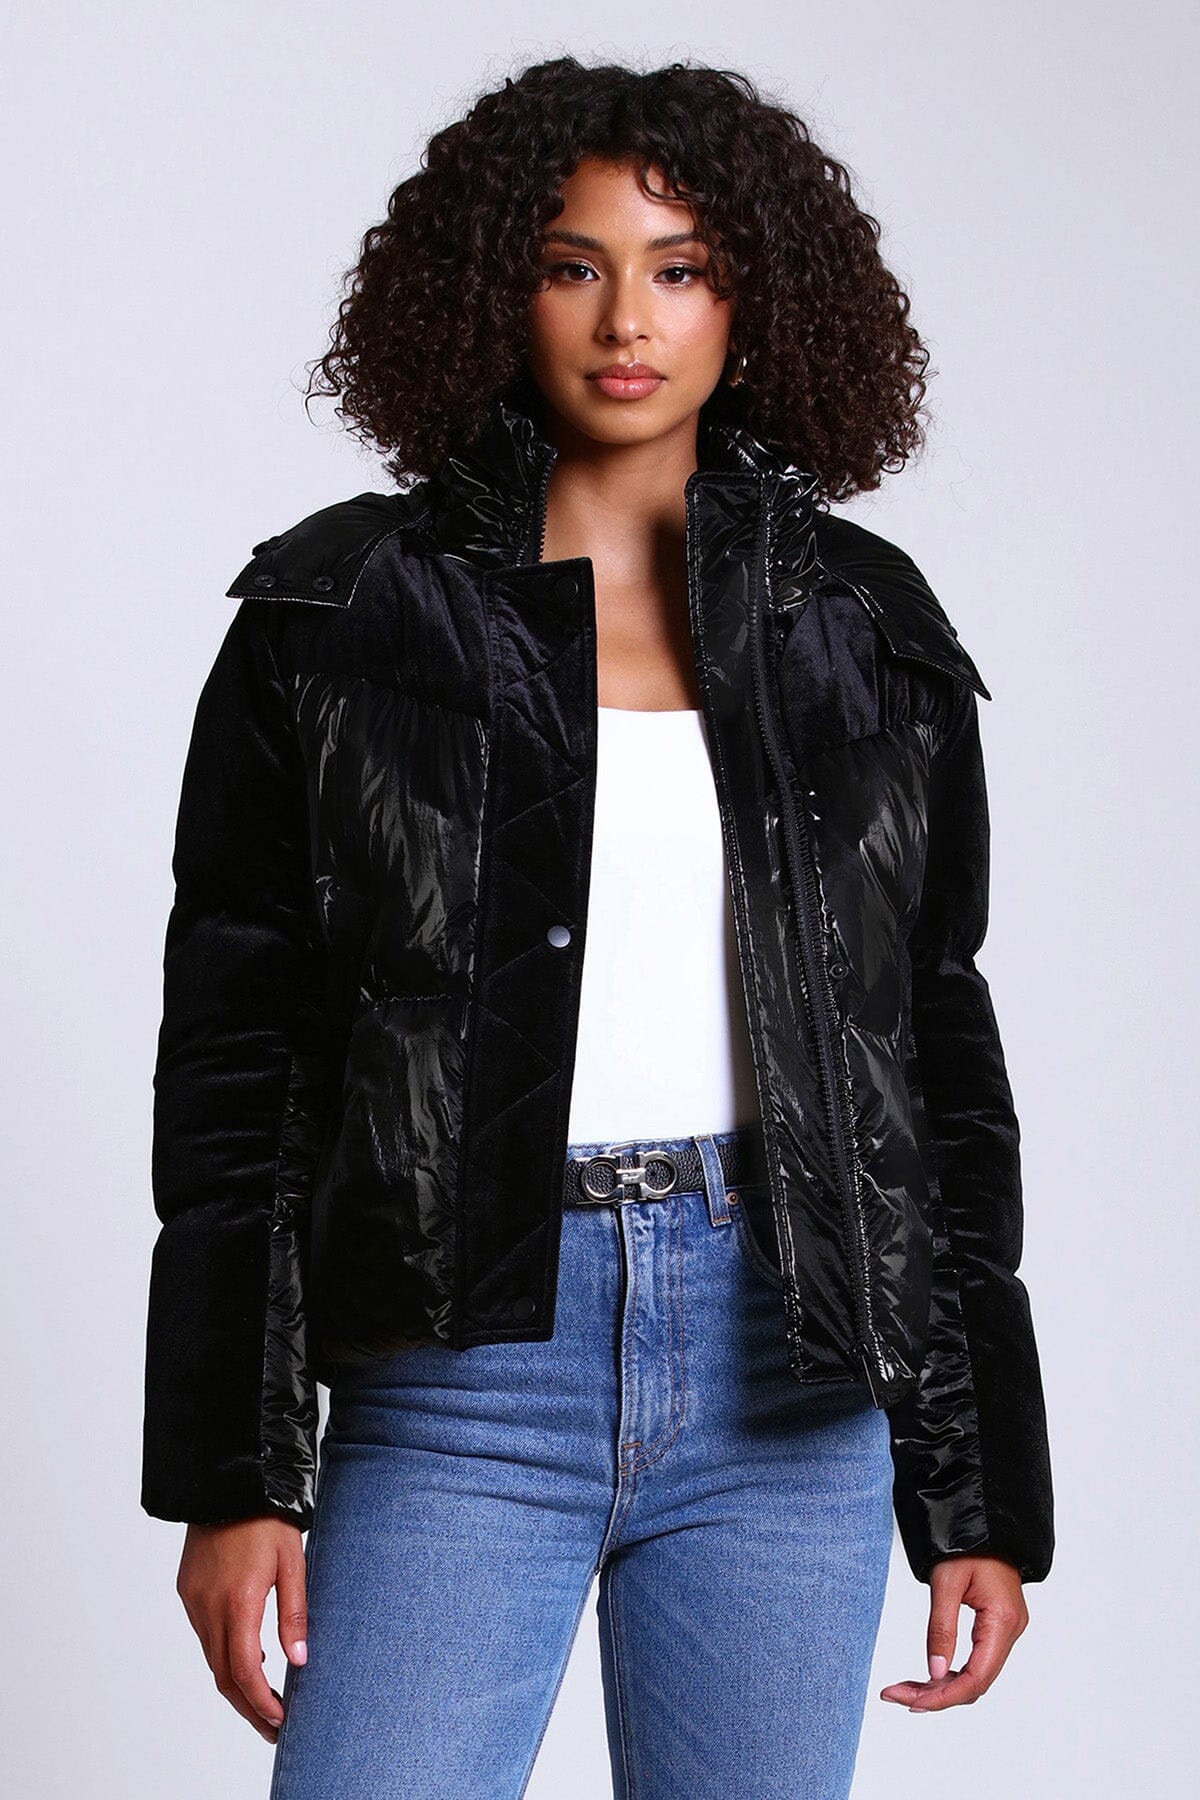 Black mixed media velvet puffer jacket coat - women's figure flattering street style coats jackets for Fall 2023 fashion trends